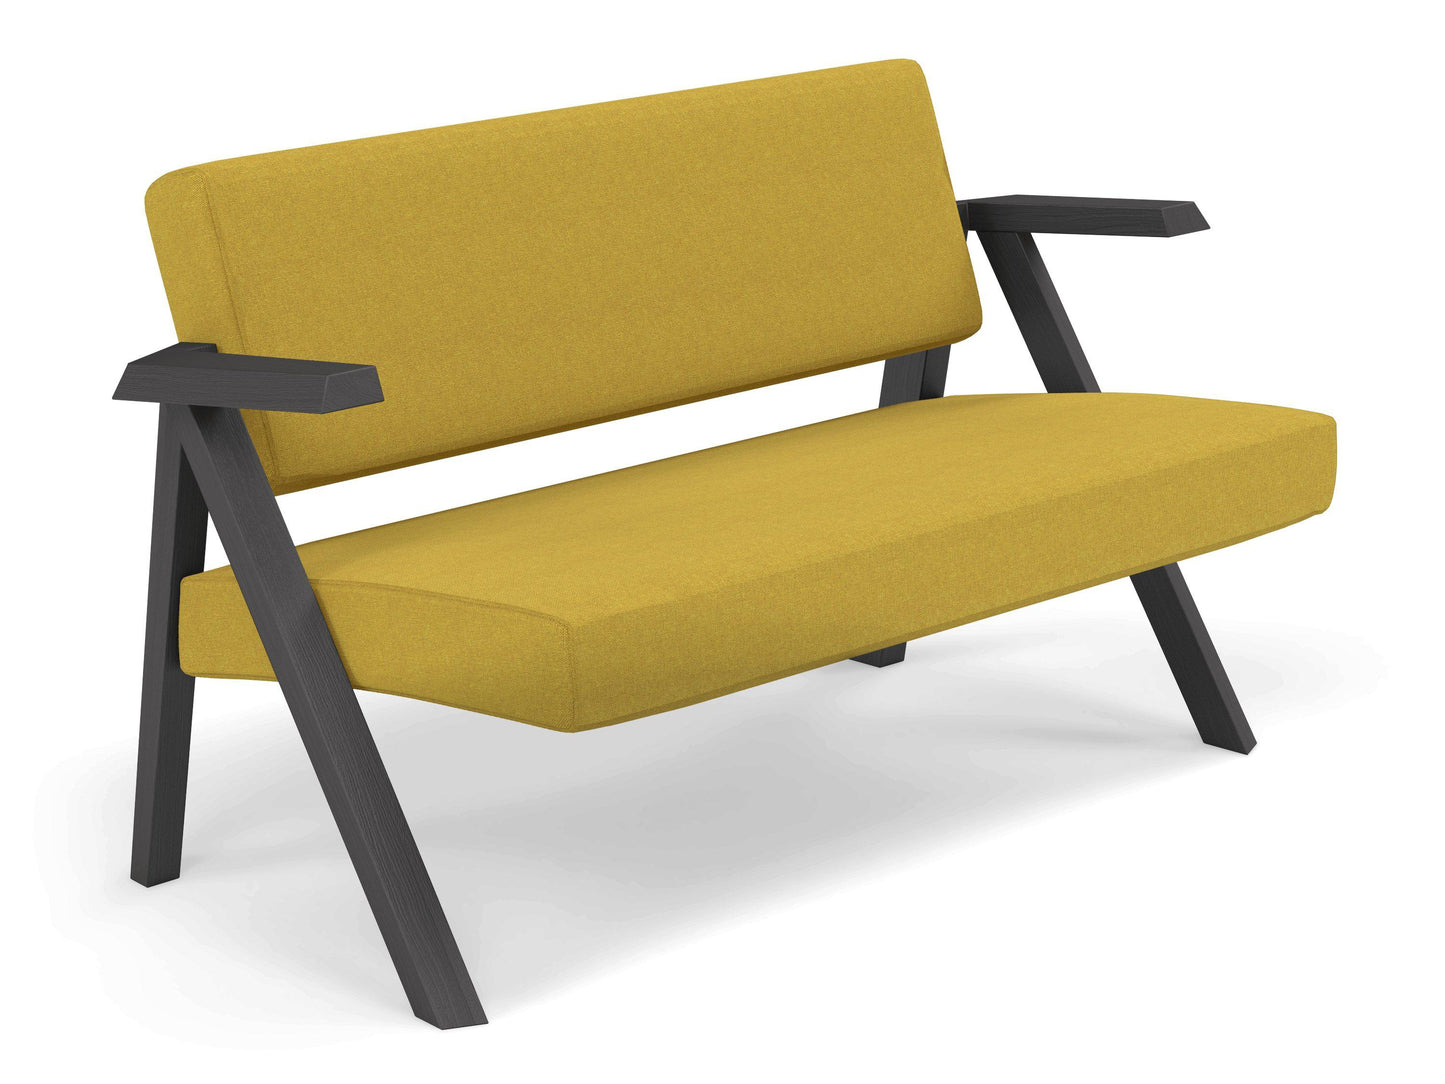 Classic Mid-century Design 2 Seater Sofa Armchair in Mustard Yellow Fabric-Distinct Designs (London) Ltd